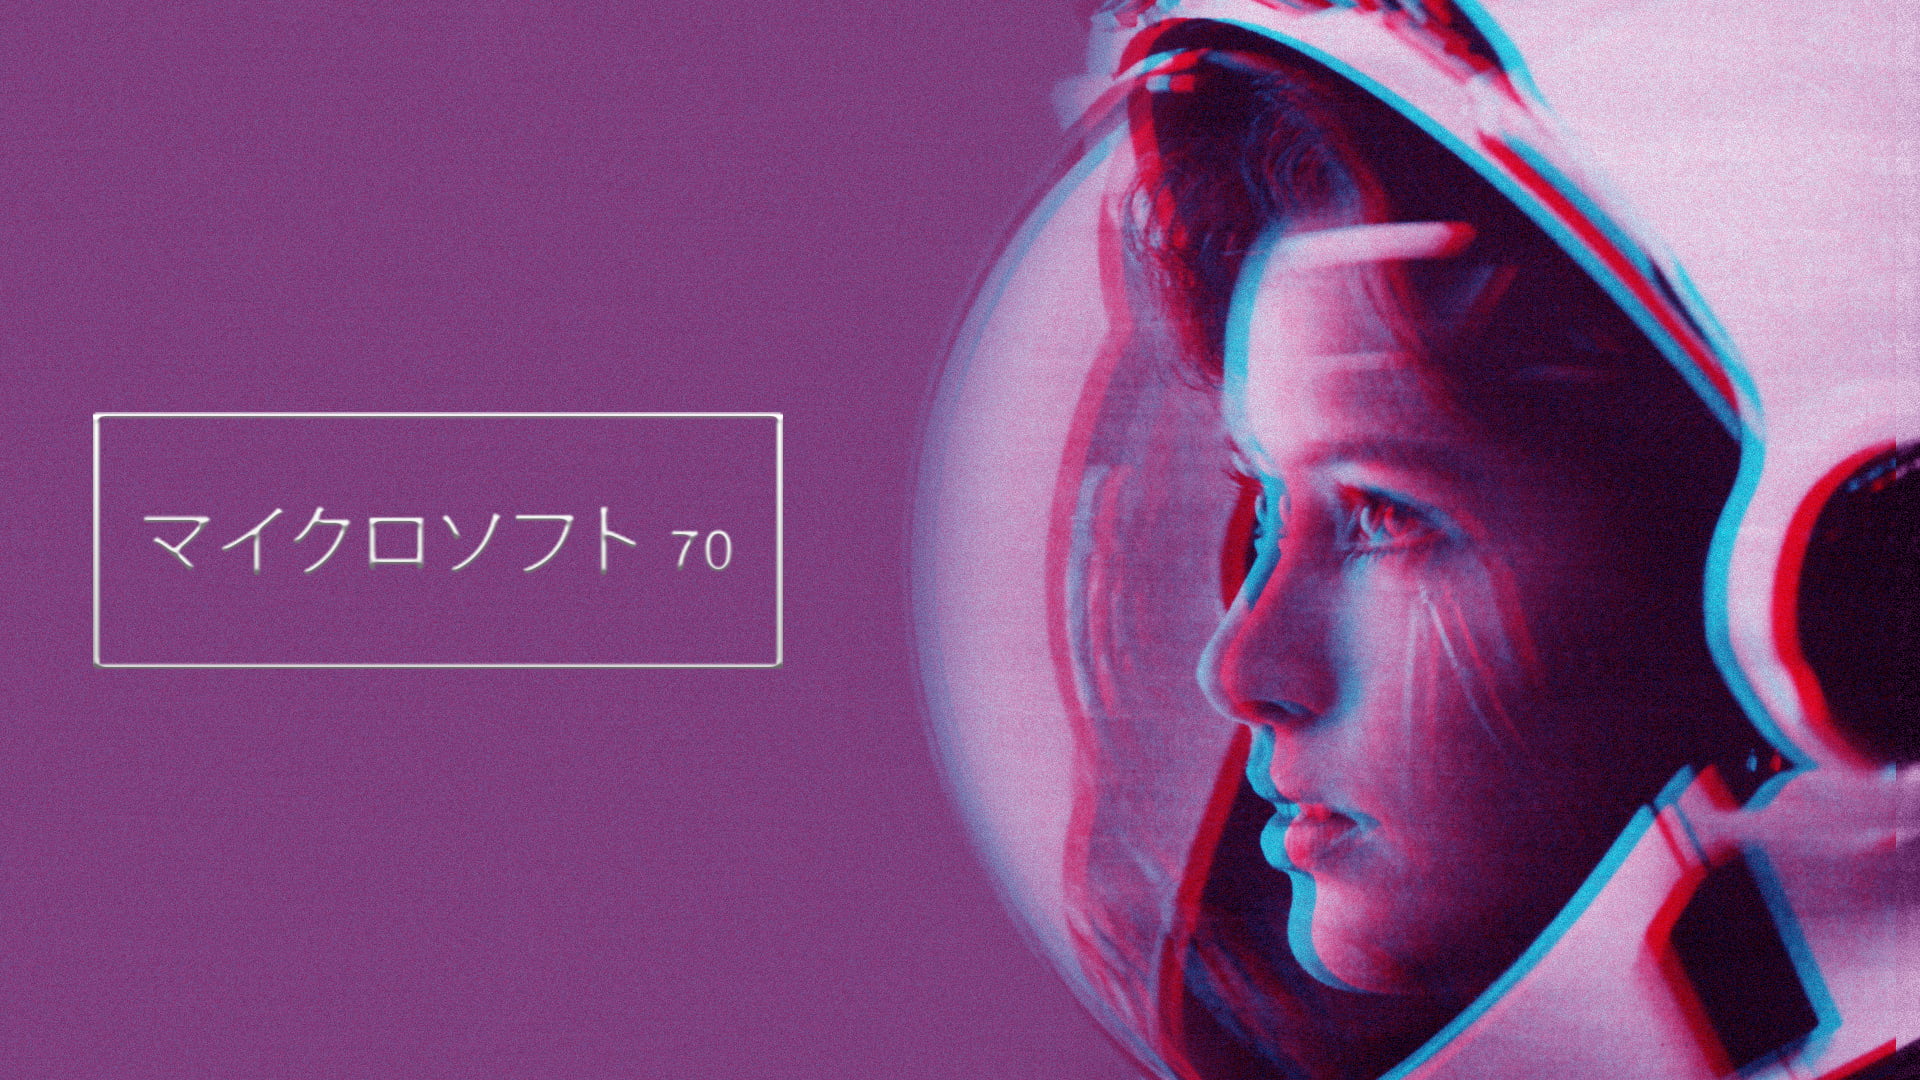 white helmet with text overlay, Anna Lee Fisher, astronaut, RGB, vaporwave